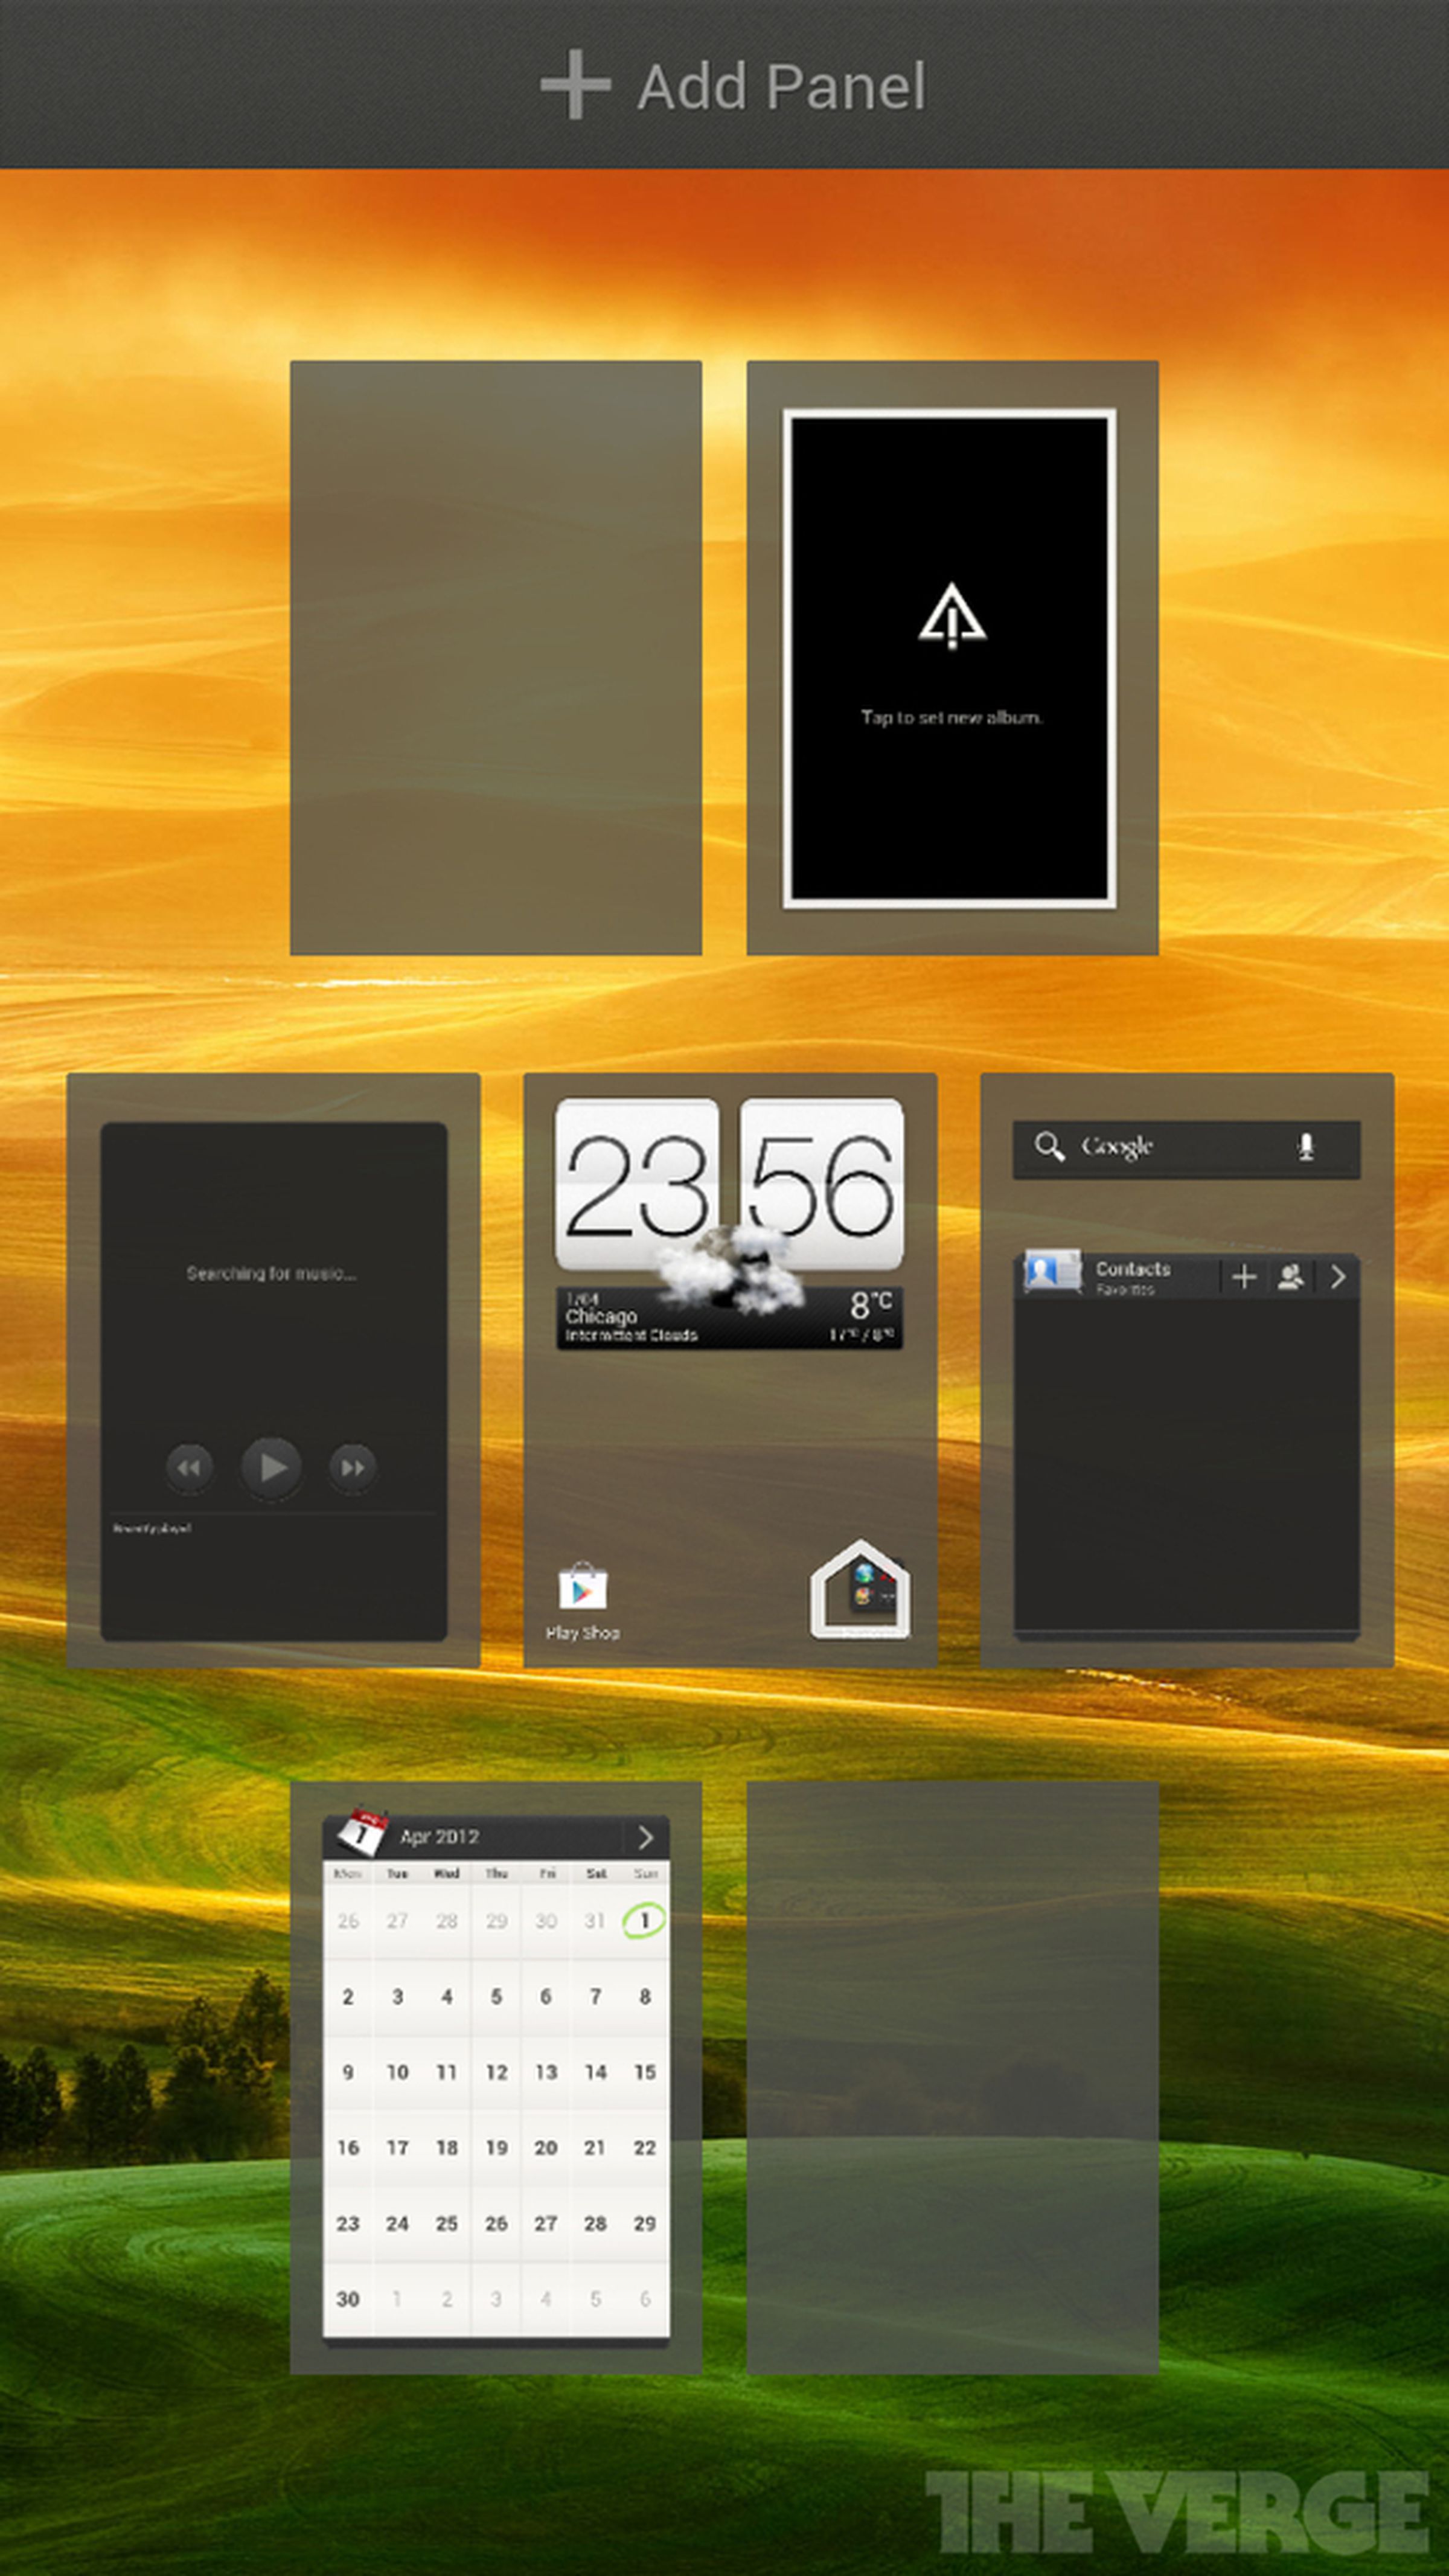 HTC One X screenshots